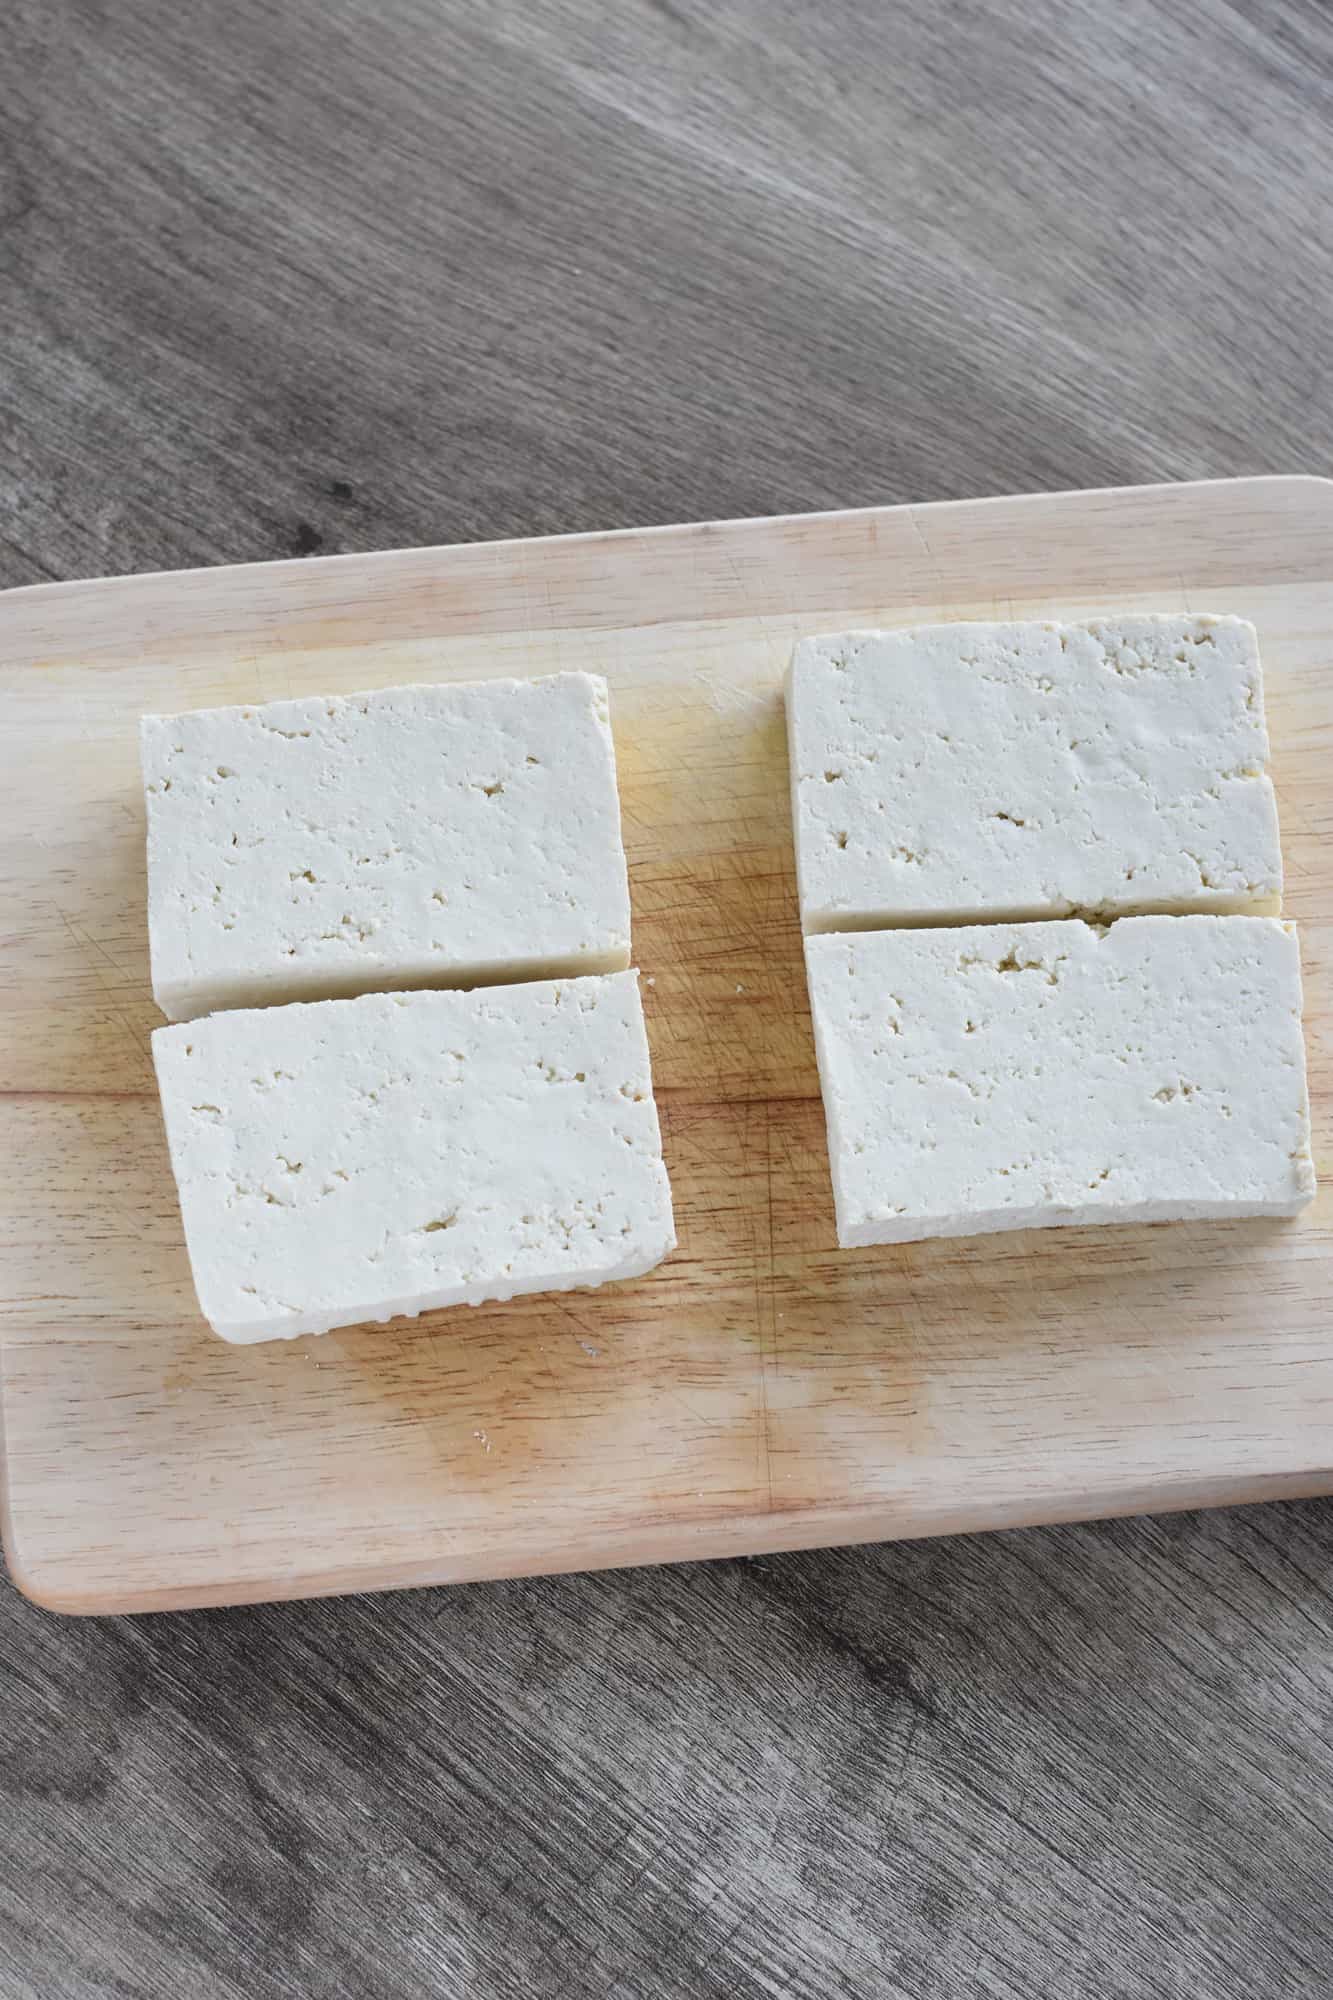 tofu cut into 4 pieces on cutting board